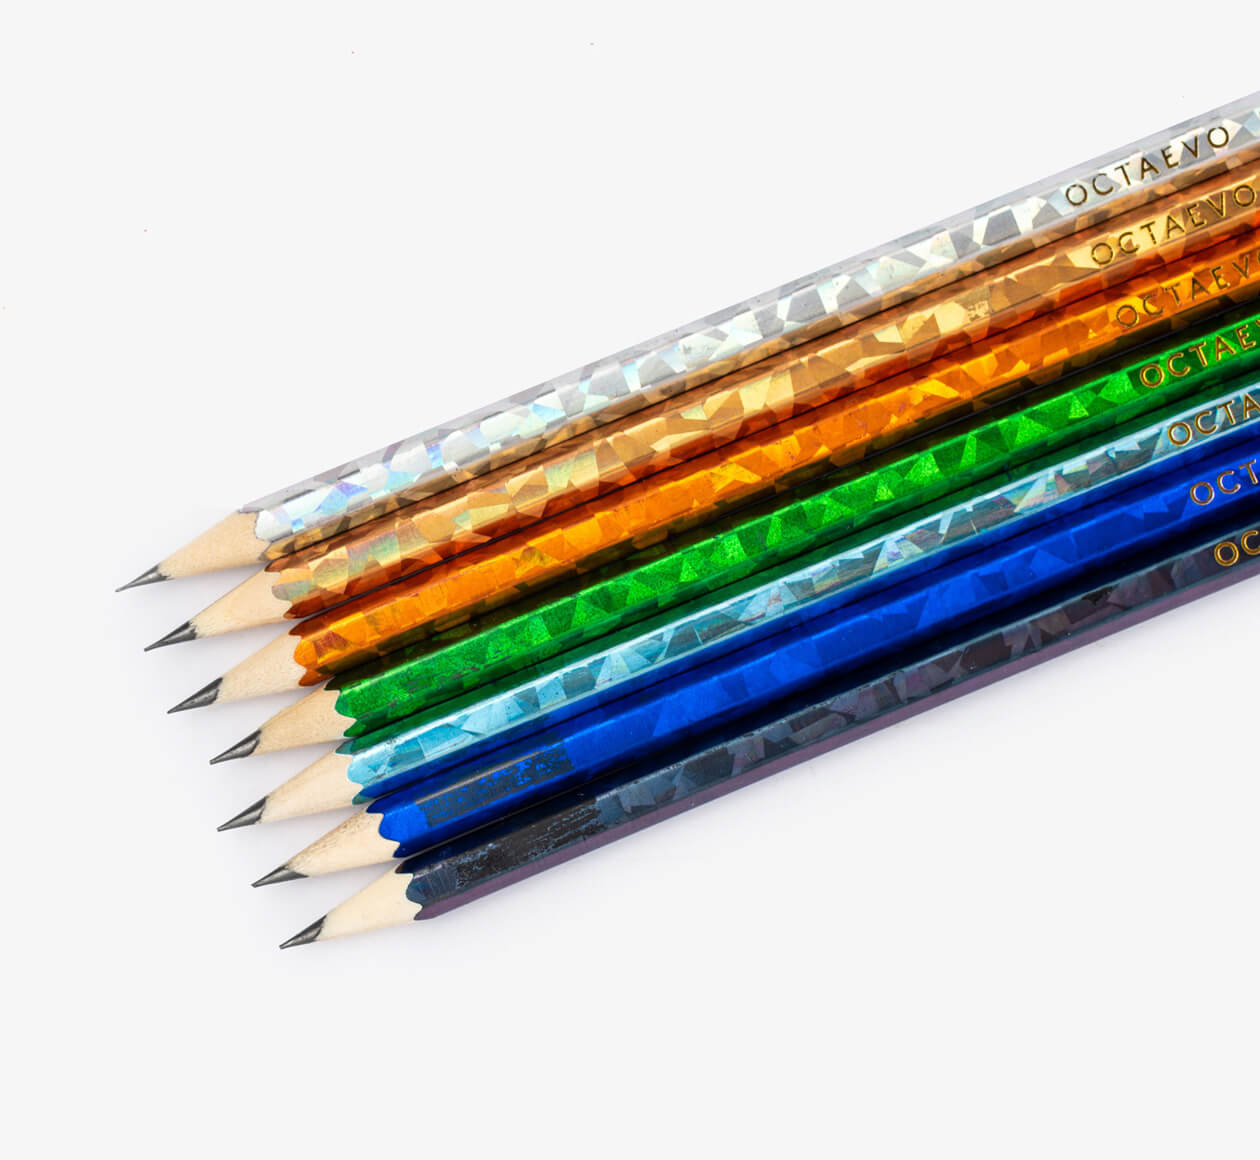 Octaevo metallic pencils on Bookblock